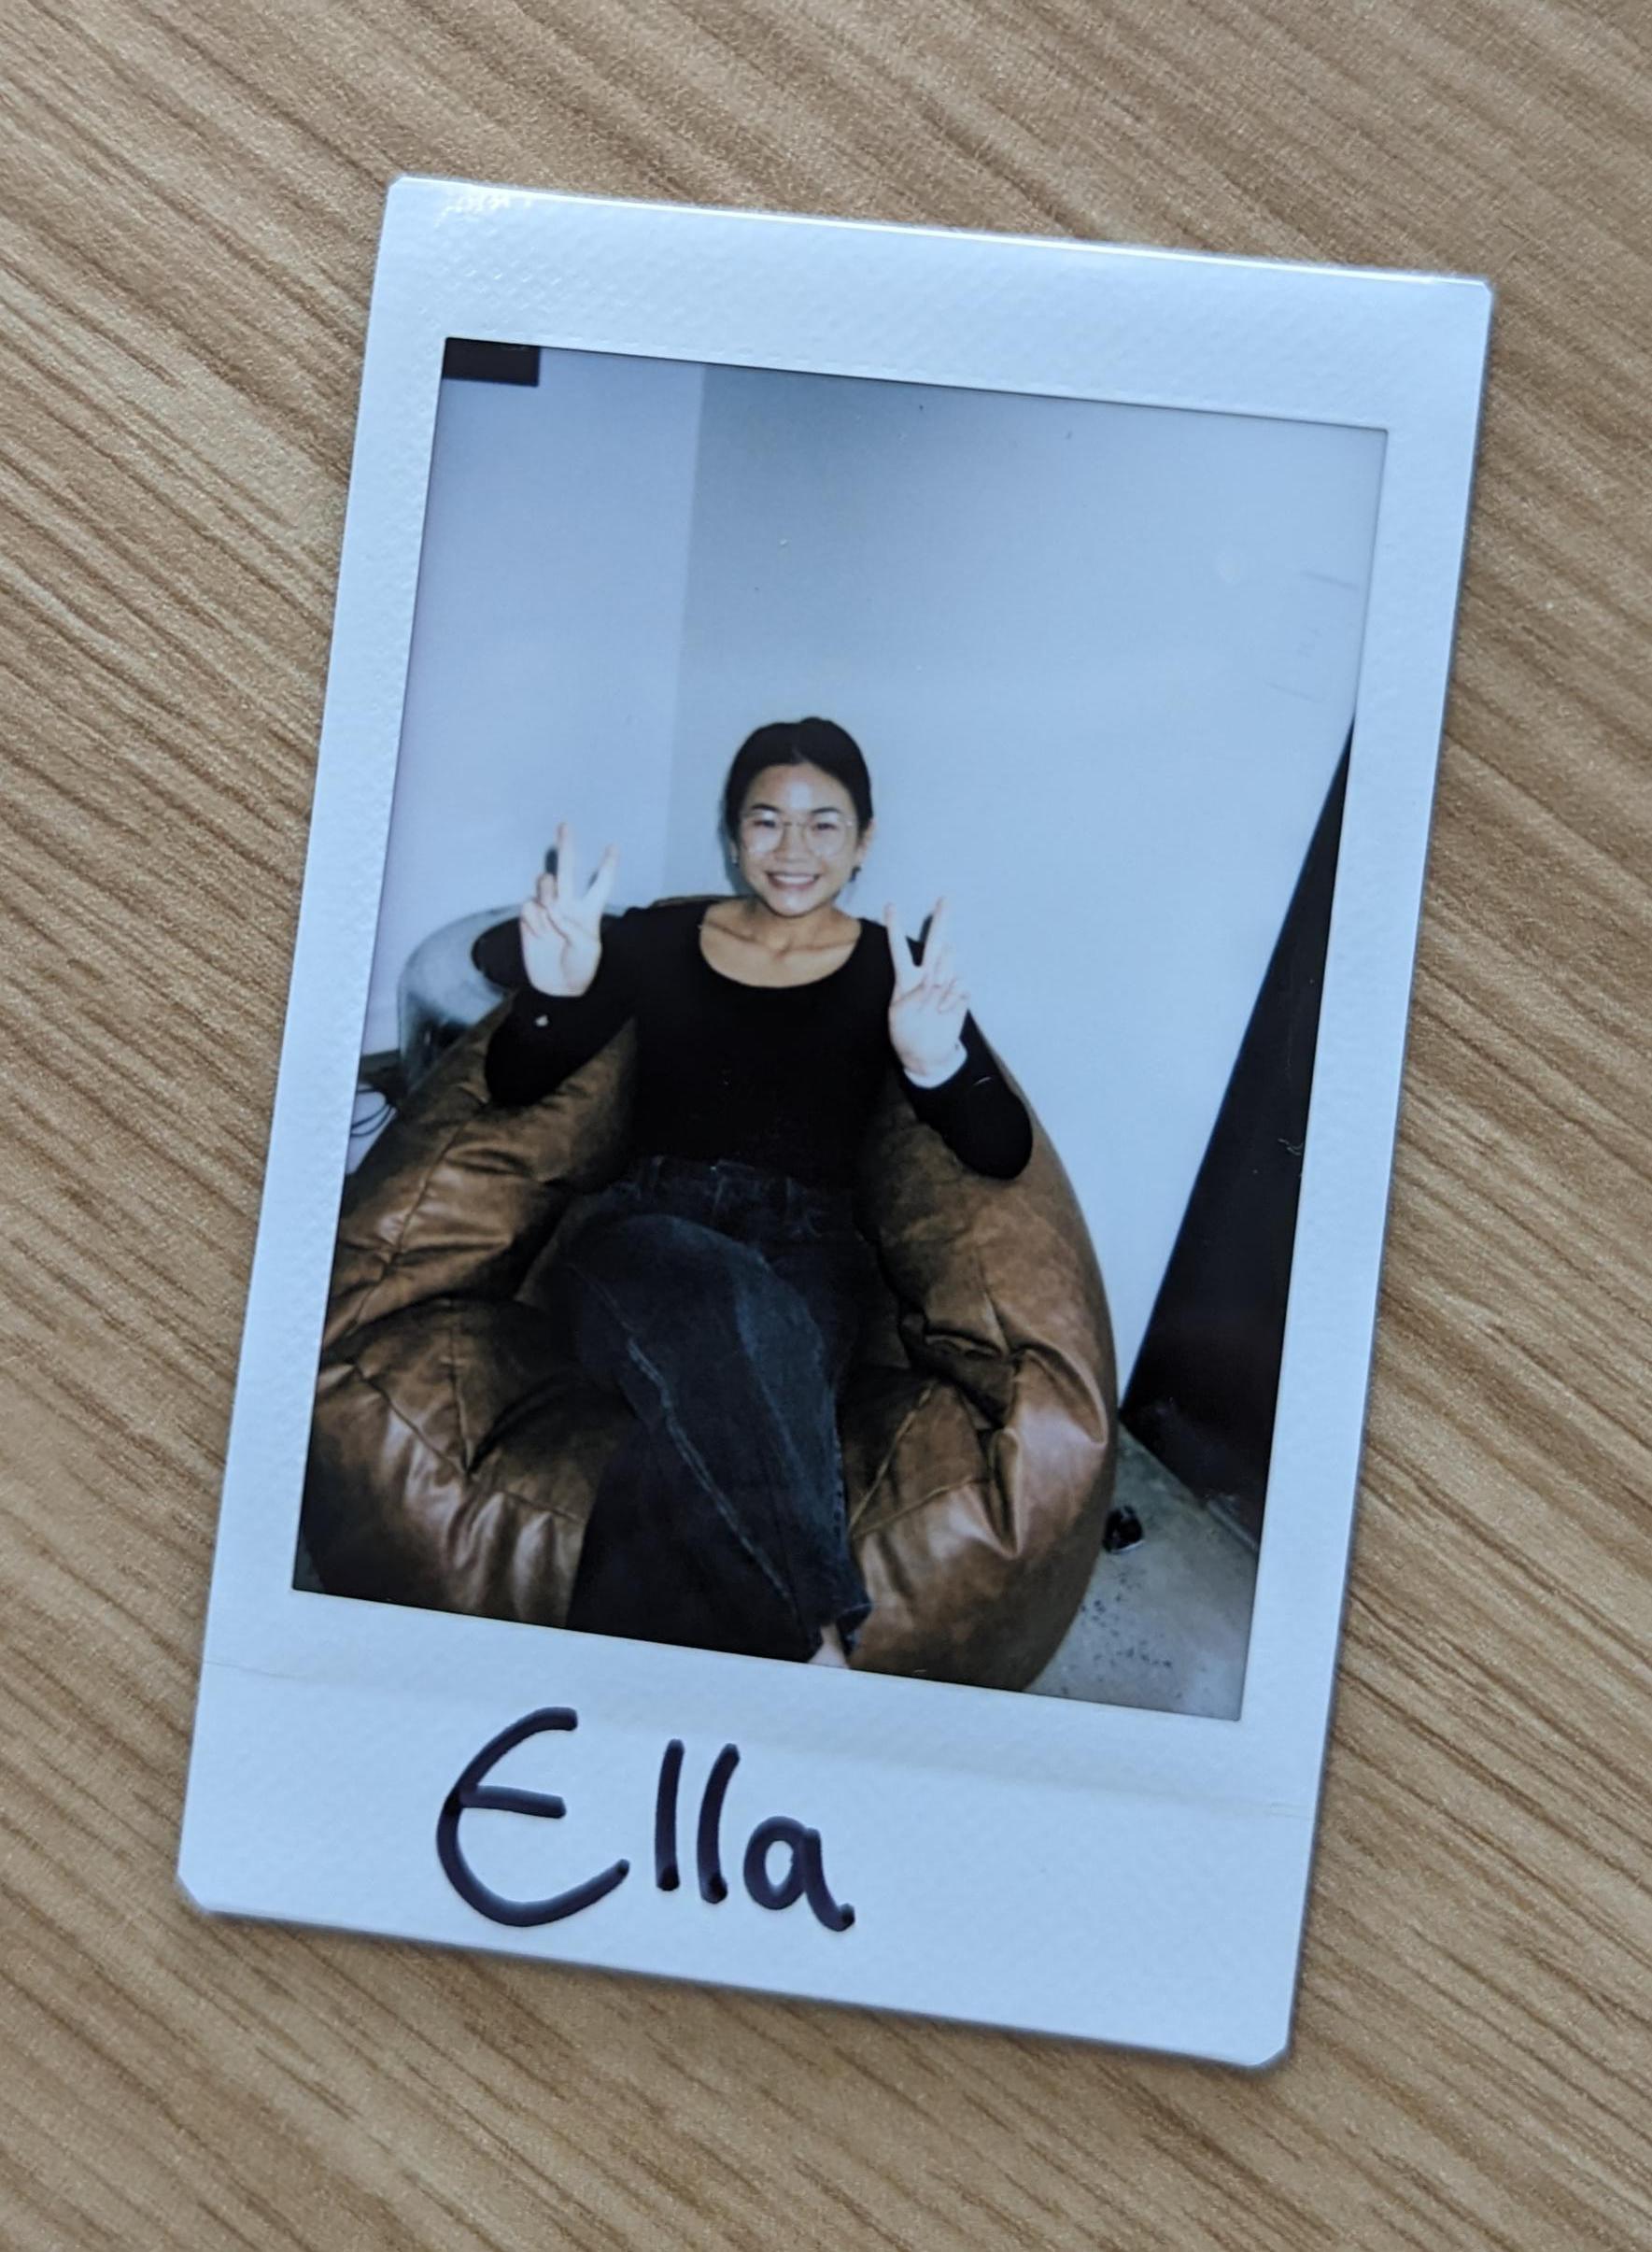 Ella Le - Staff polaroid